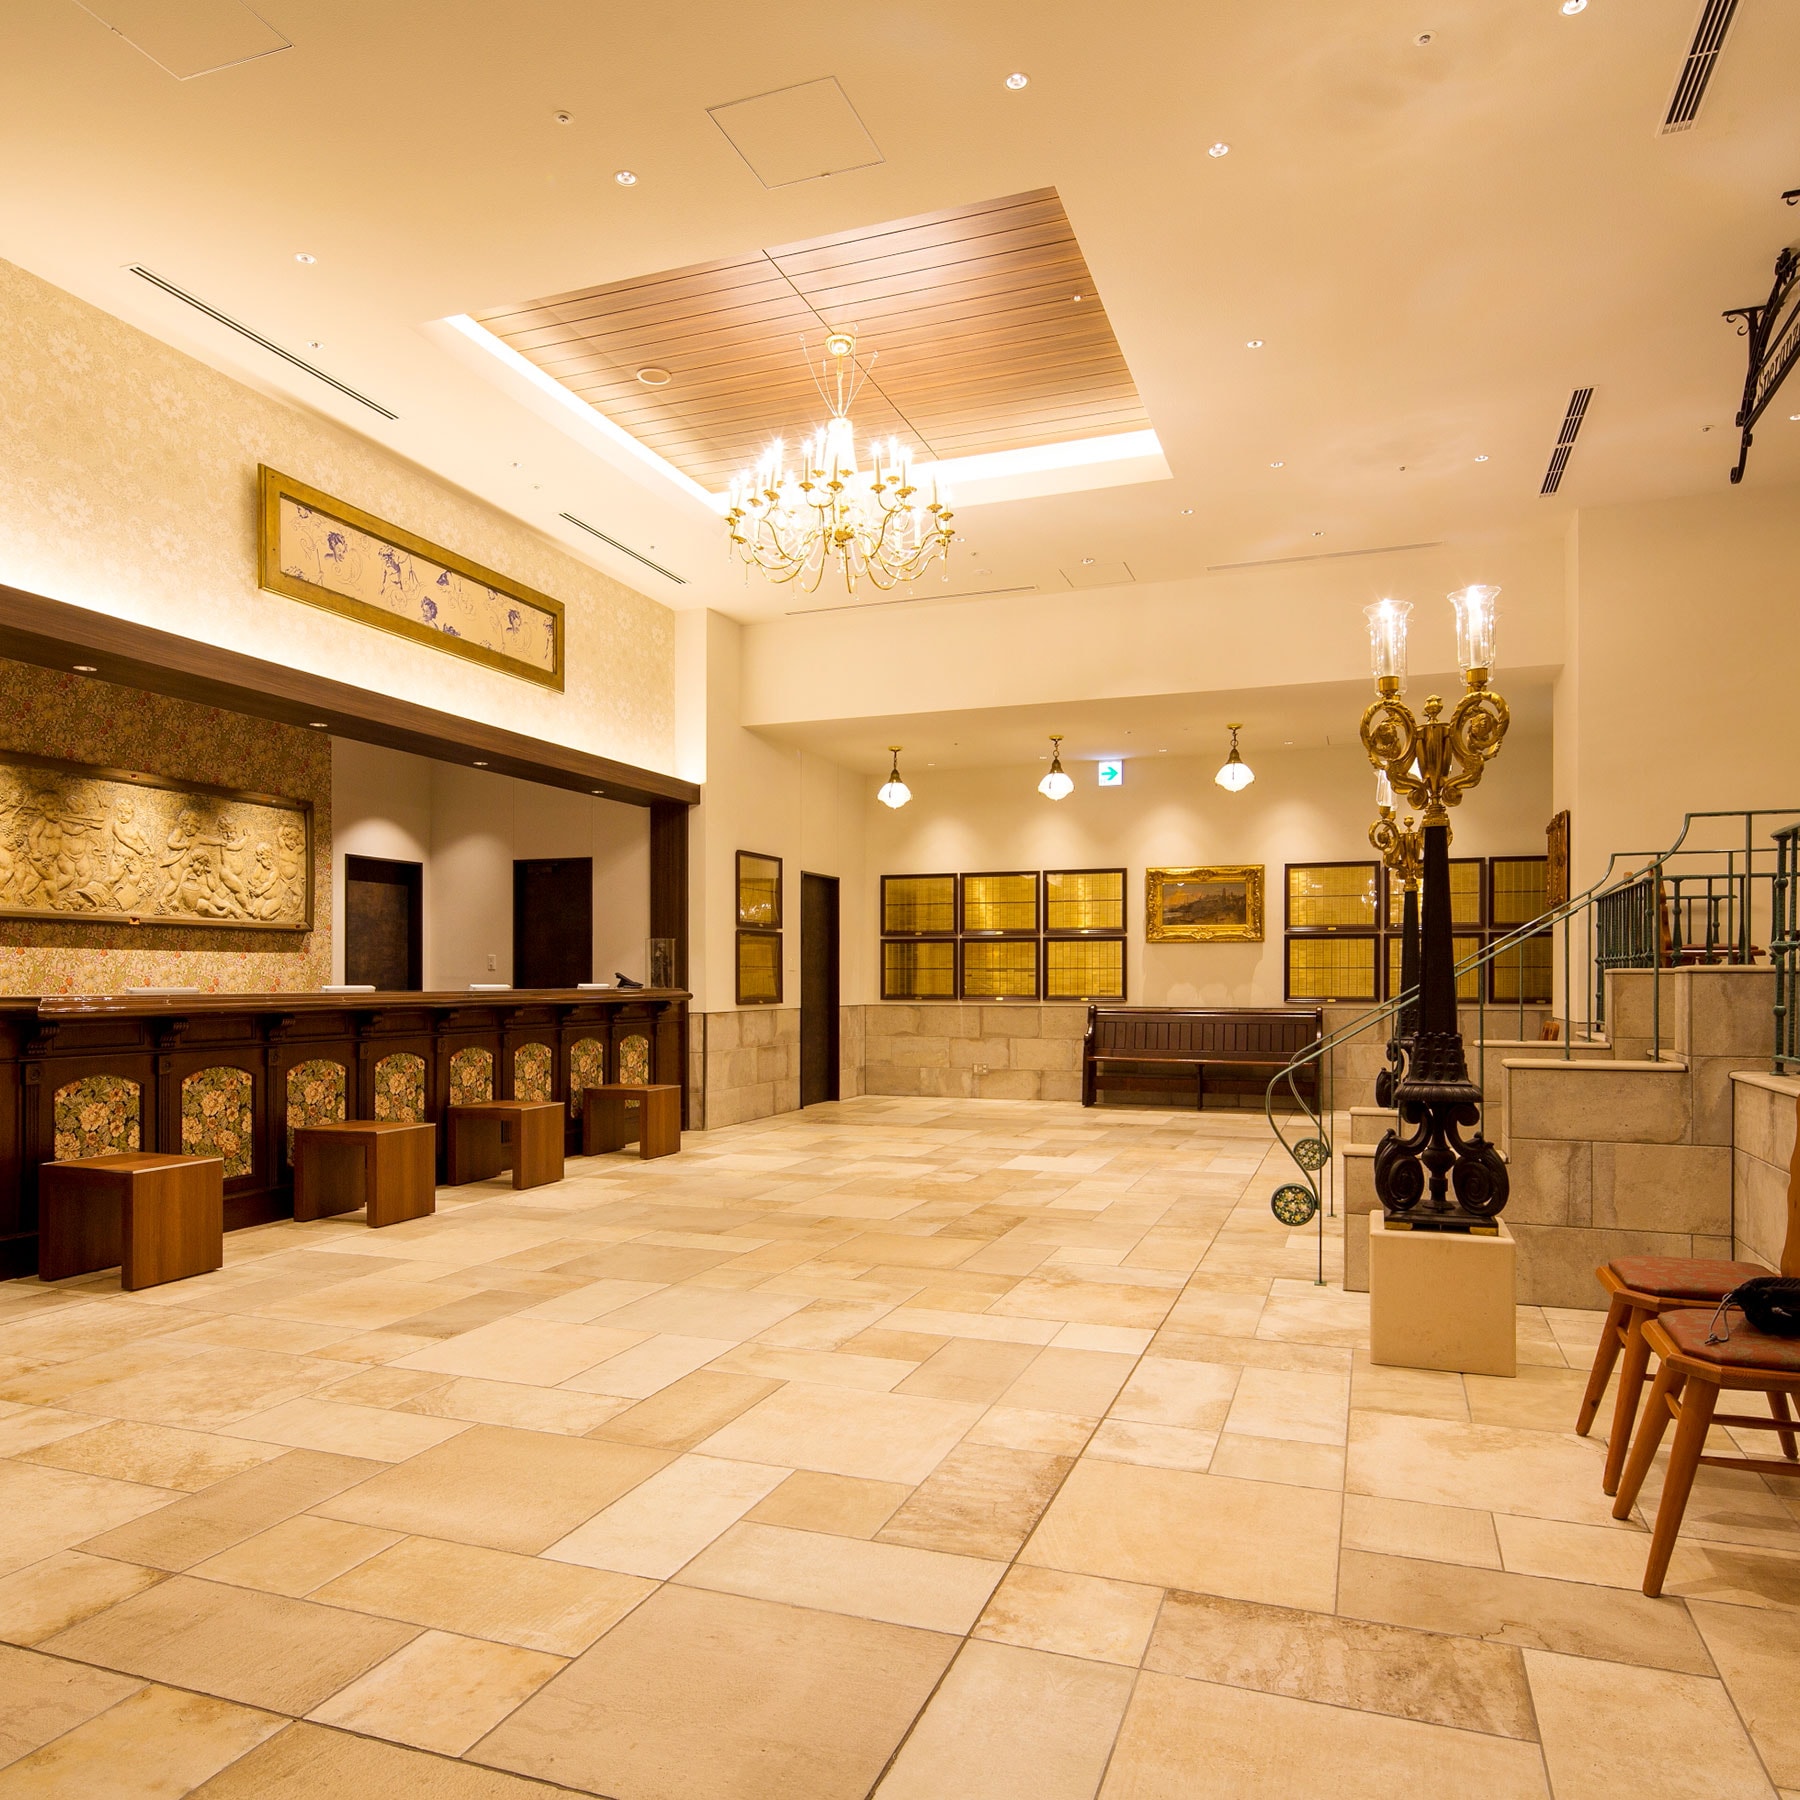 [Facilities in the hotel] Hotel lobby